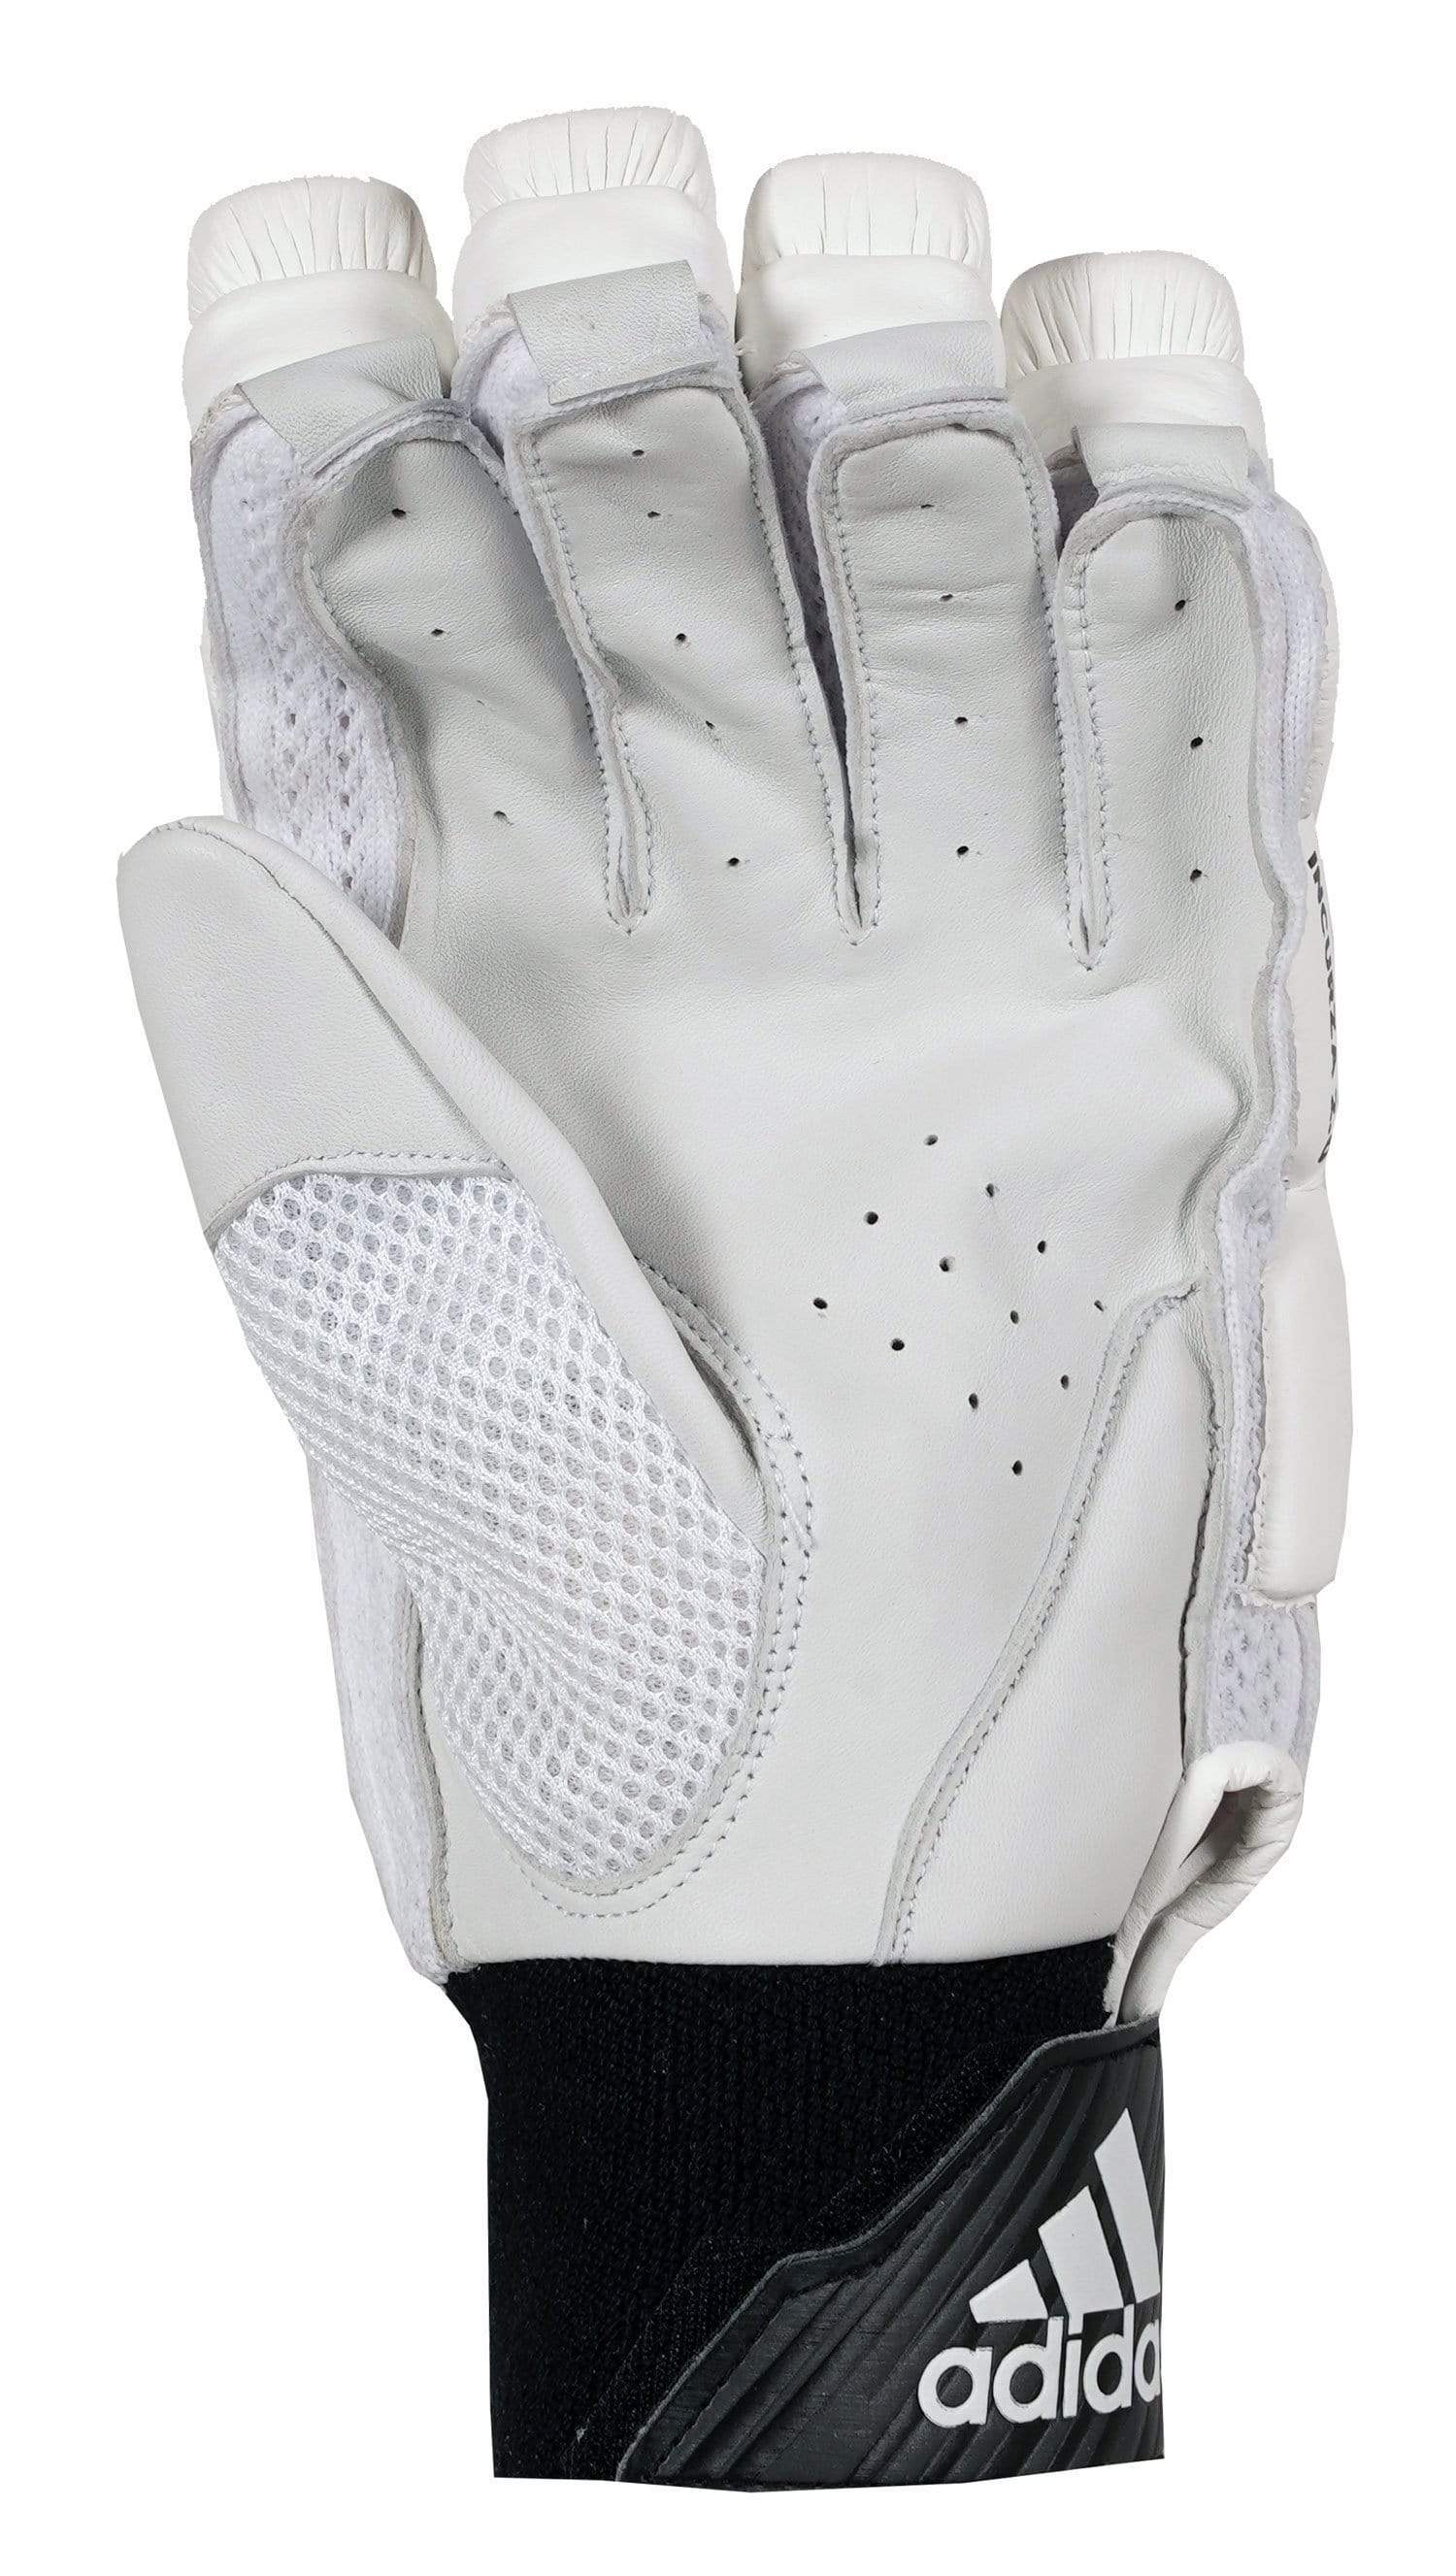 Adidas Gloves Adidas Incurza 2.0 Batting Gloves